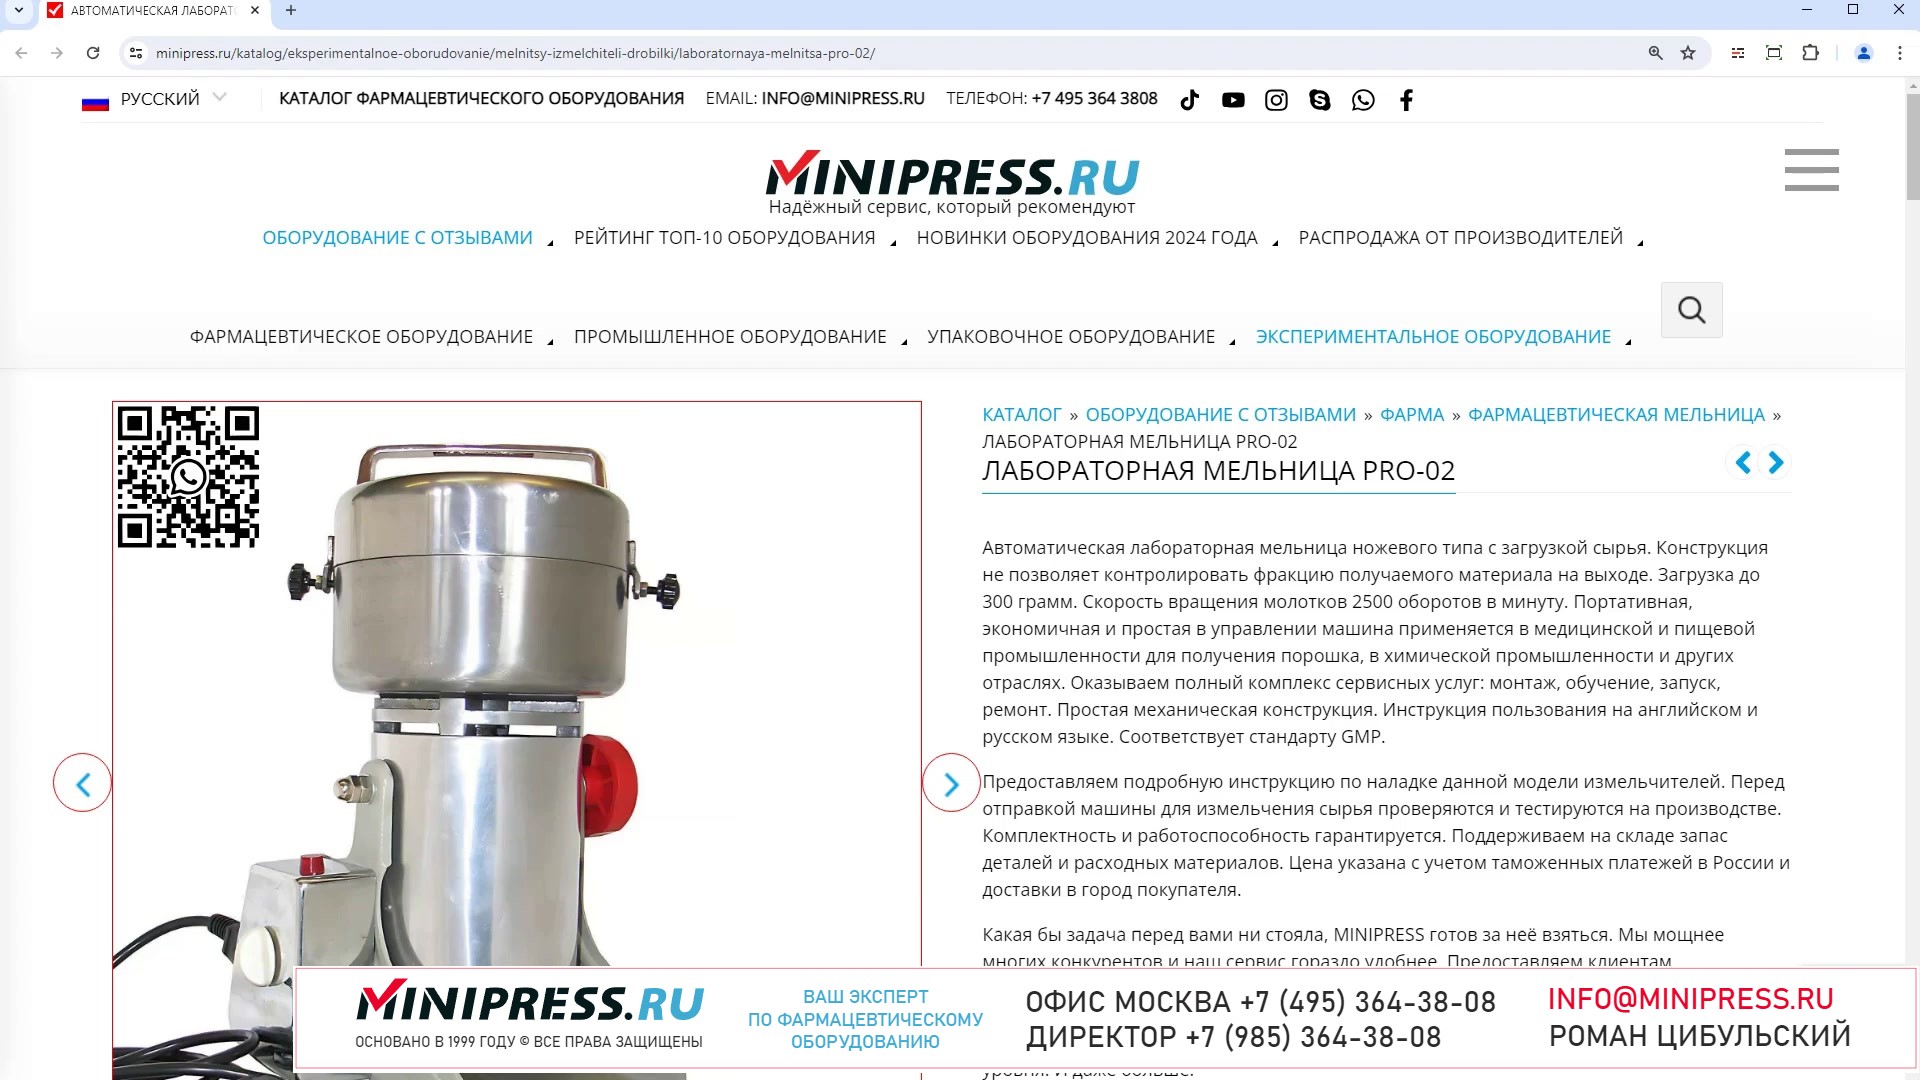 Minipress.ru Лабораторная мельница PRO-02